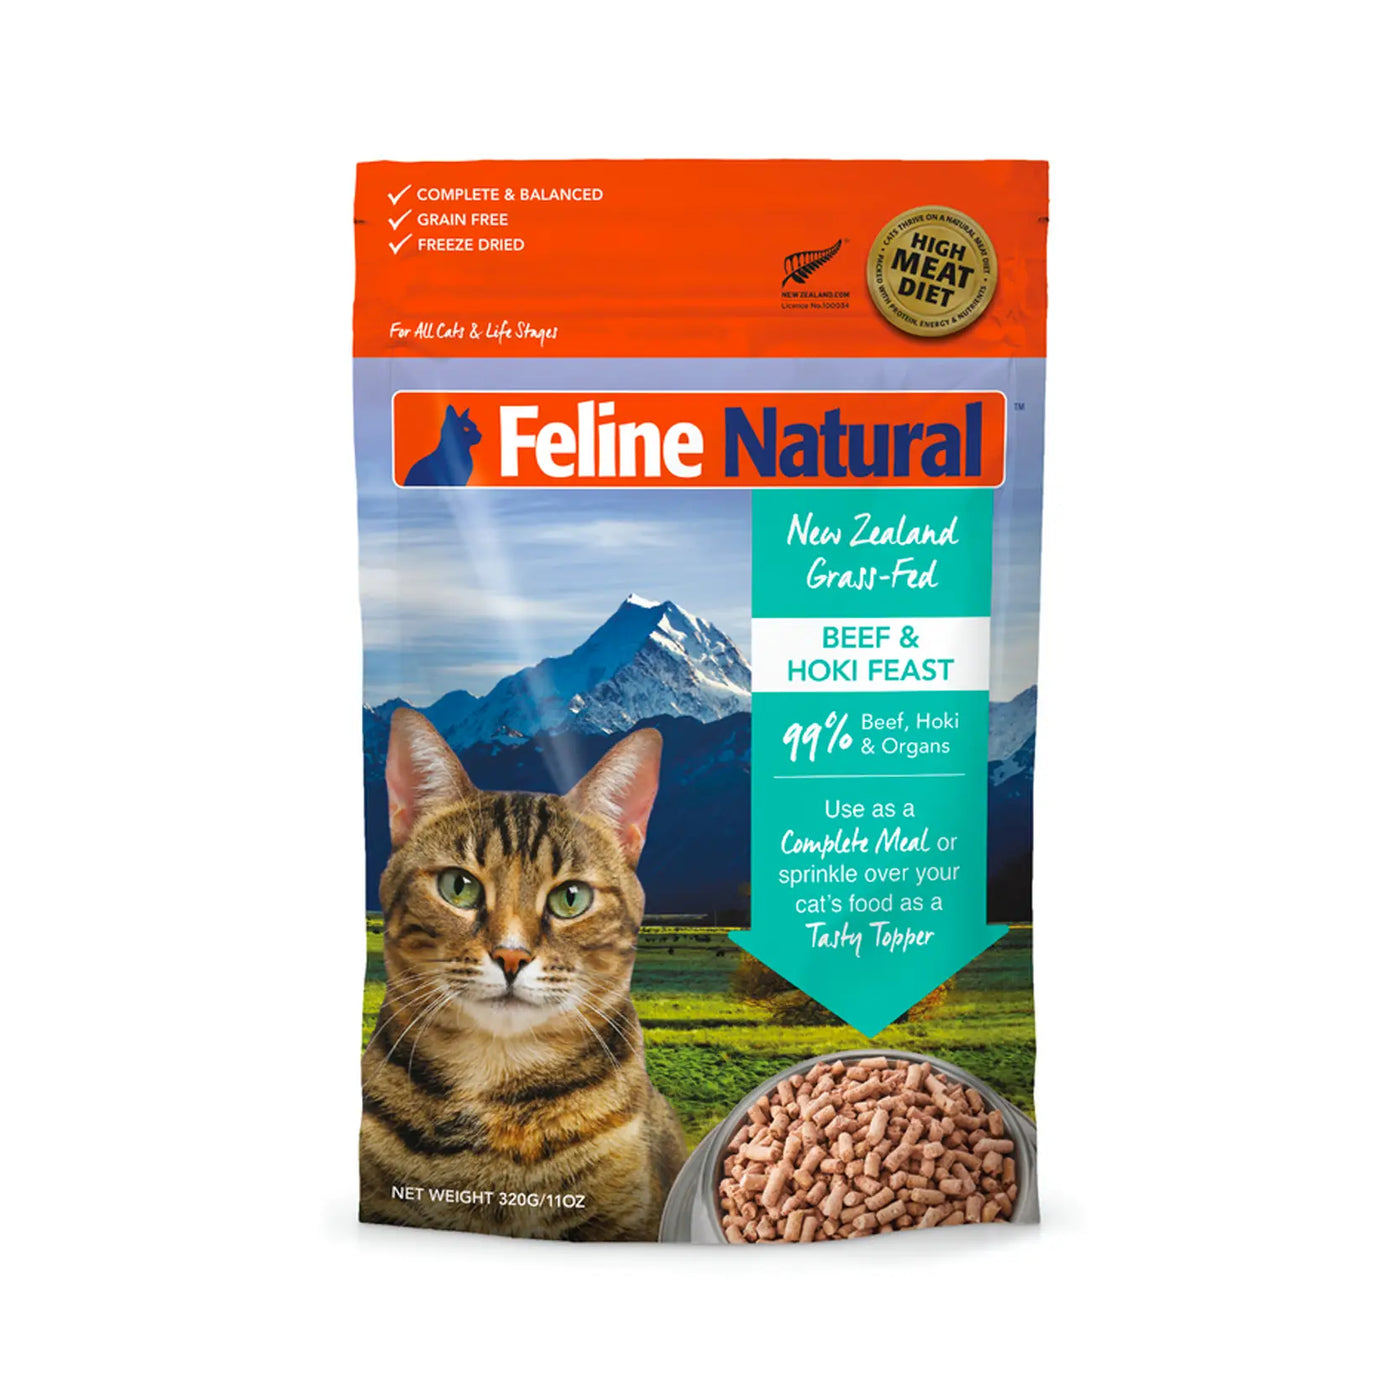 Feline Natural Freeze Dried Cat Food - Beef And Hoki Feast 320g